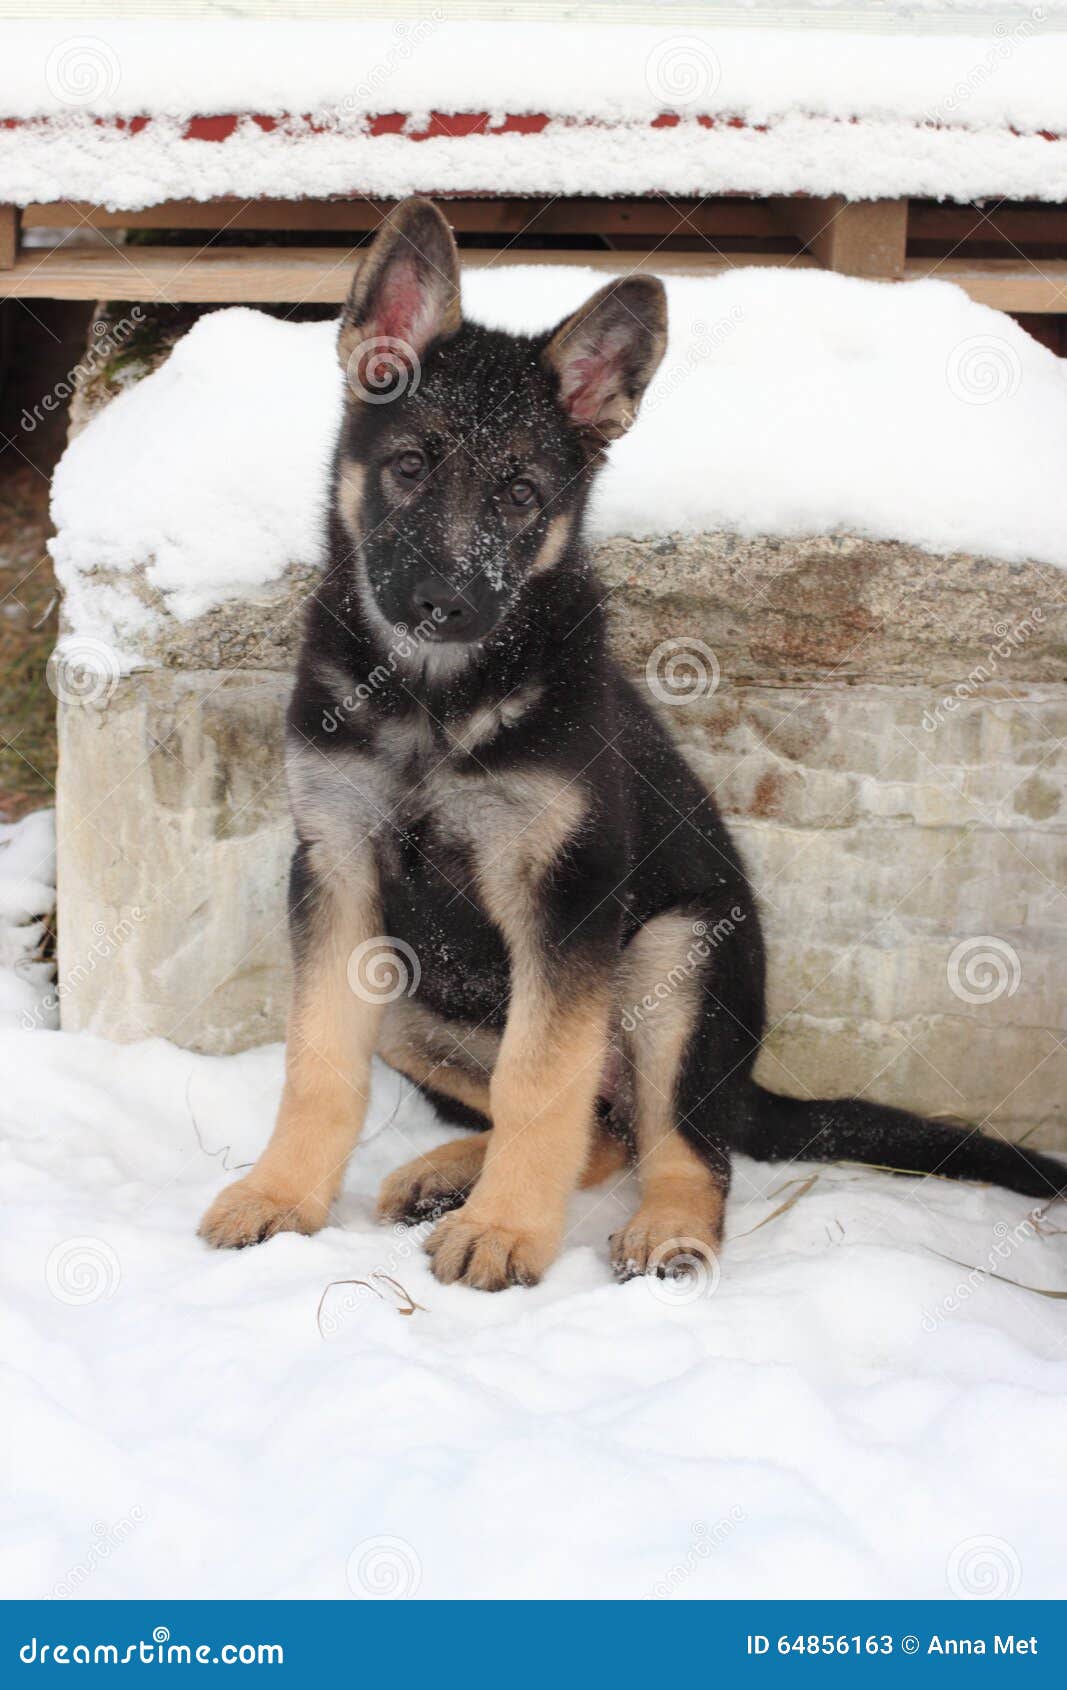 German shepherd puppy stock image. Image of beauty, nature - 64856163